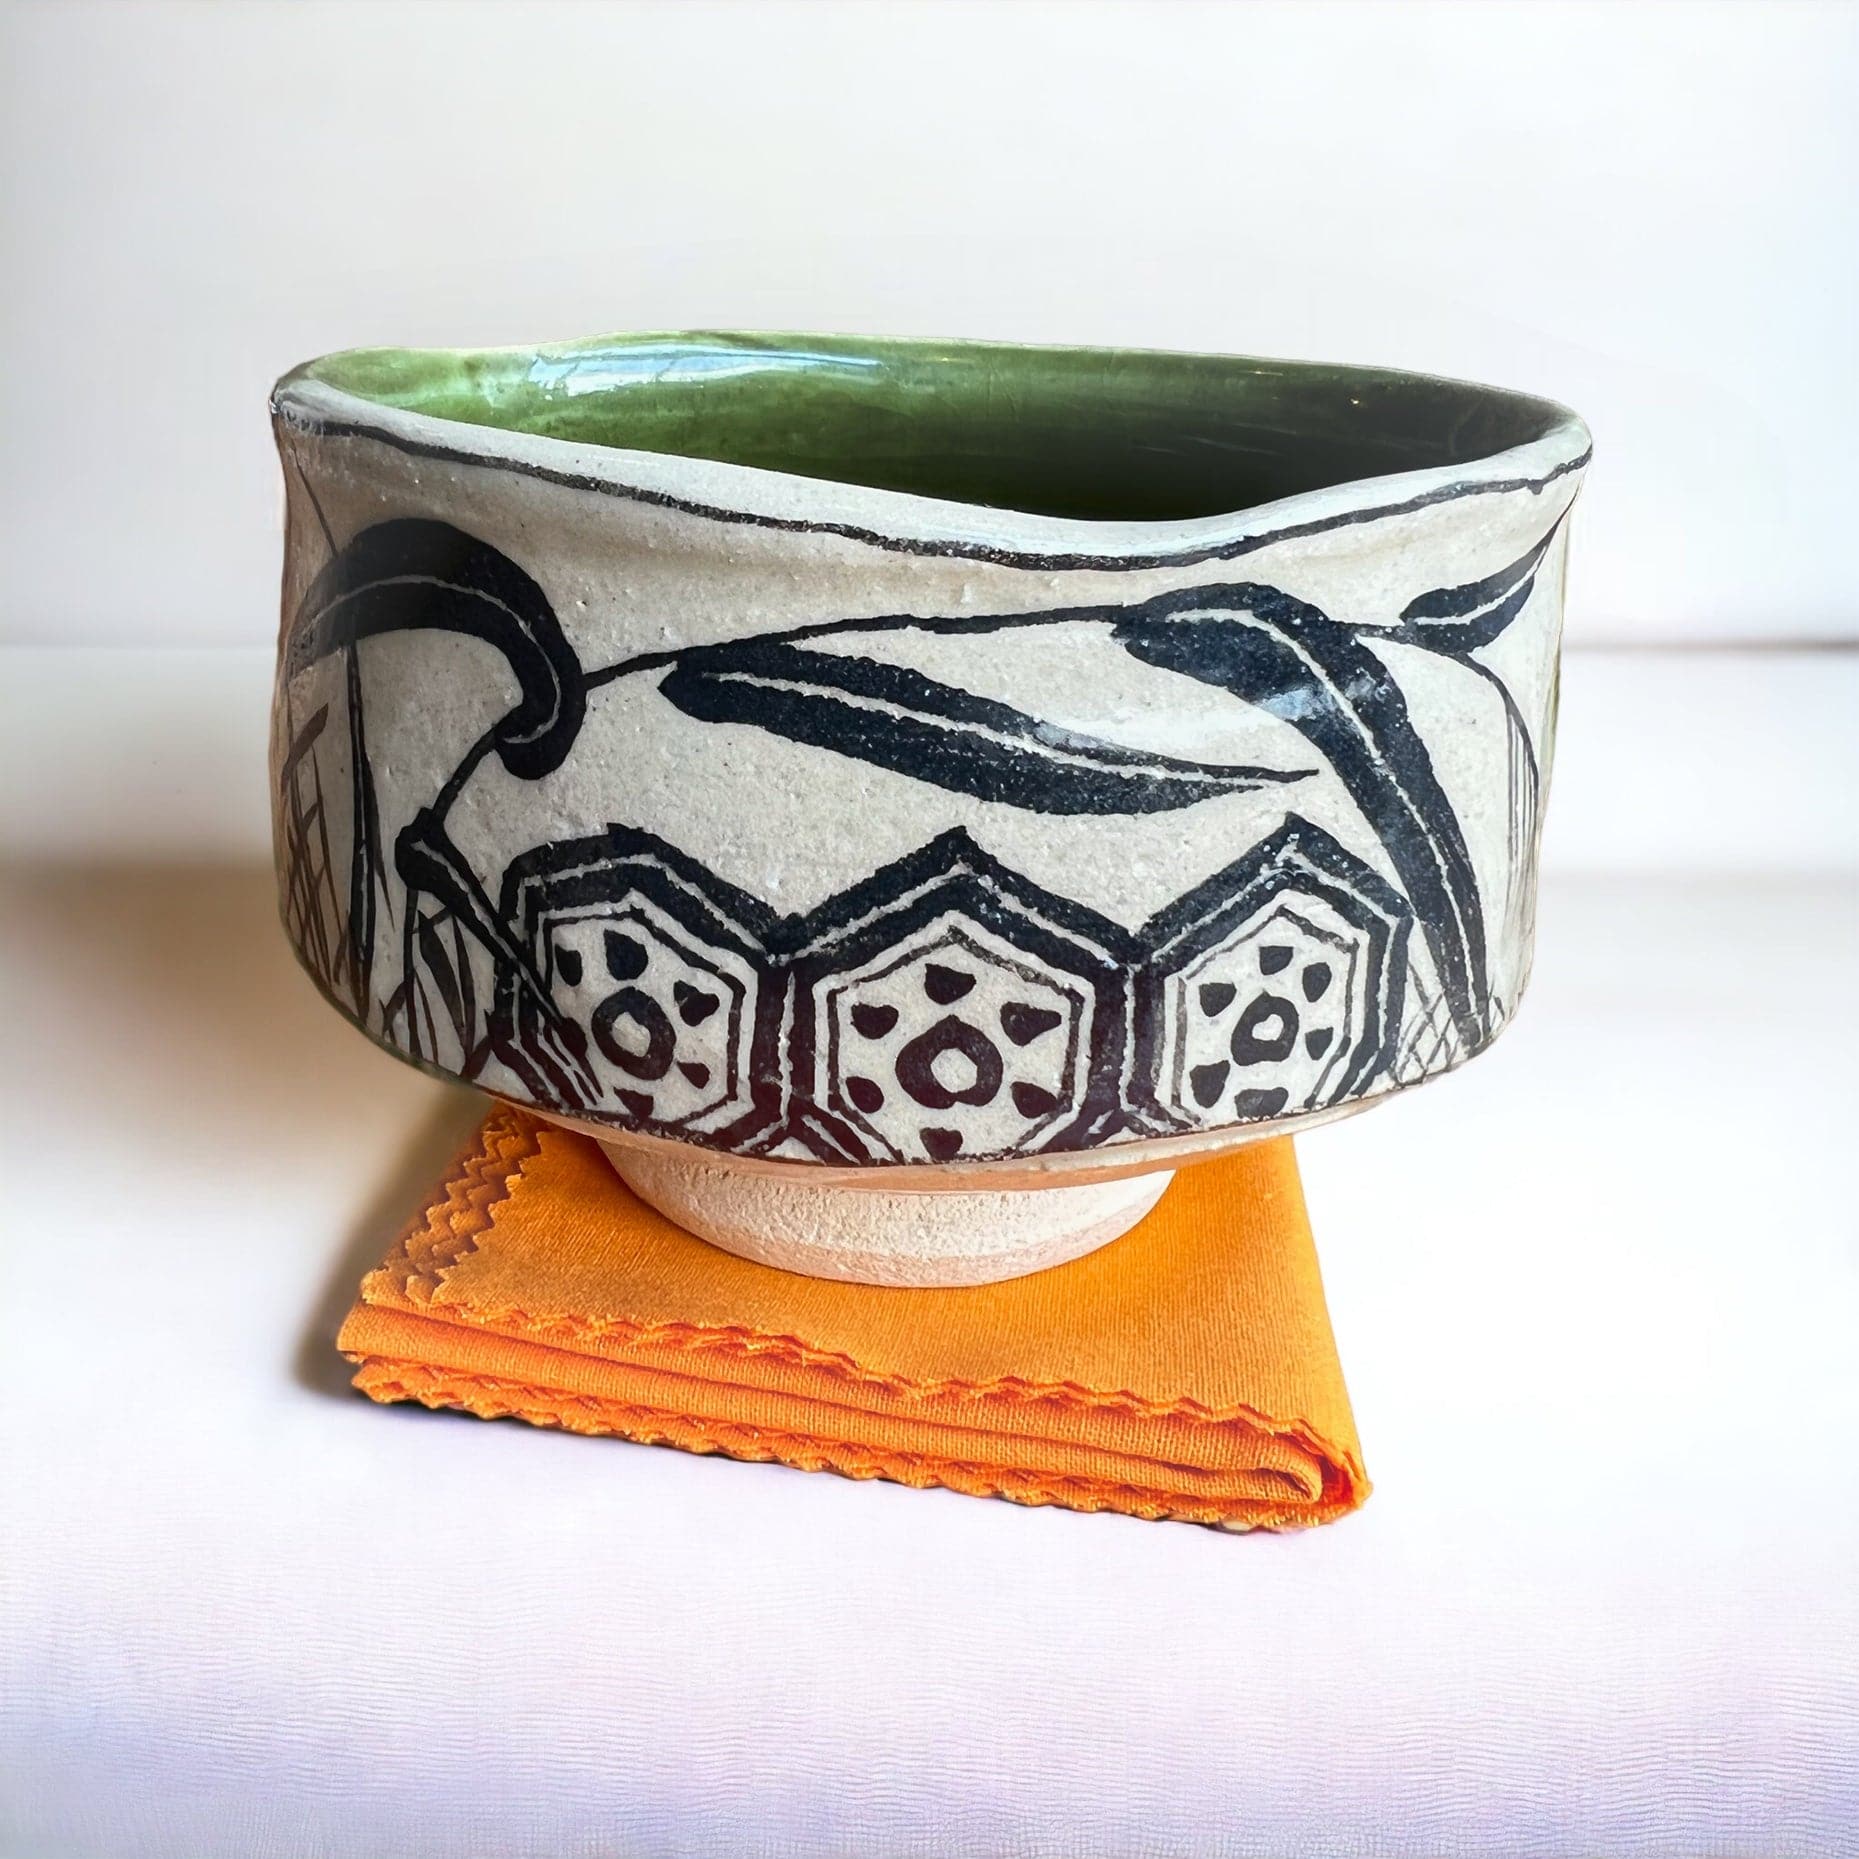 Oribe matcha bowl close up on orange tea towel.